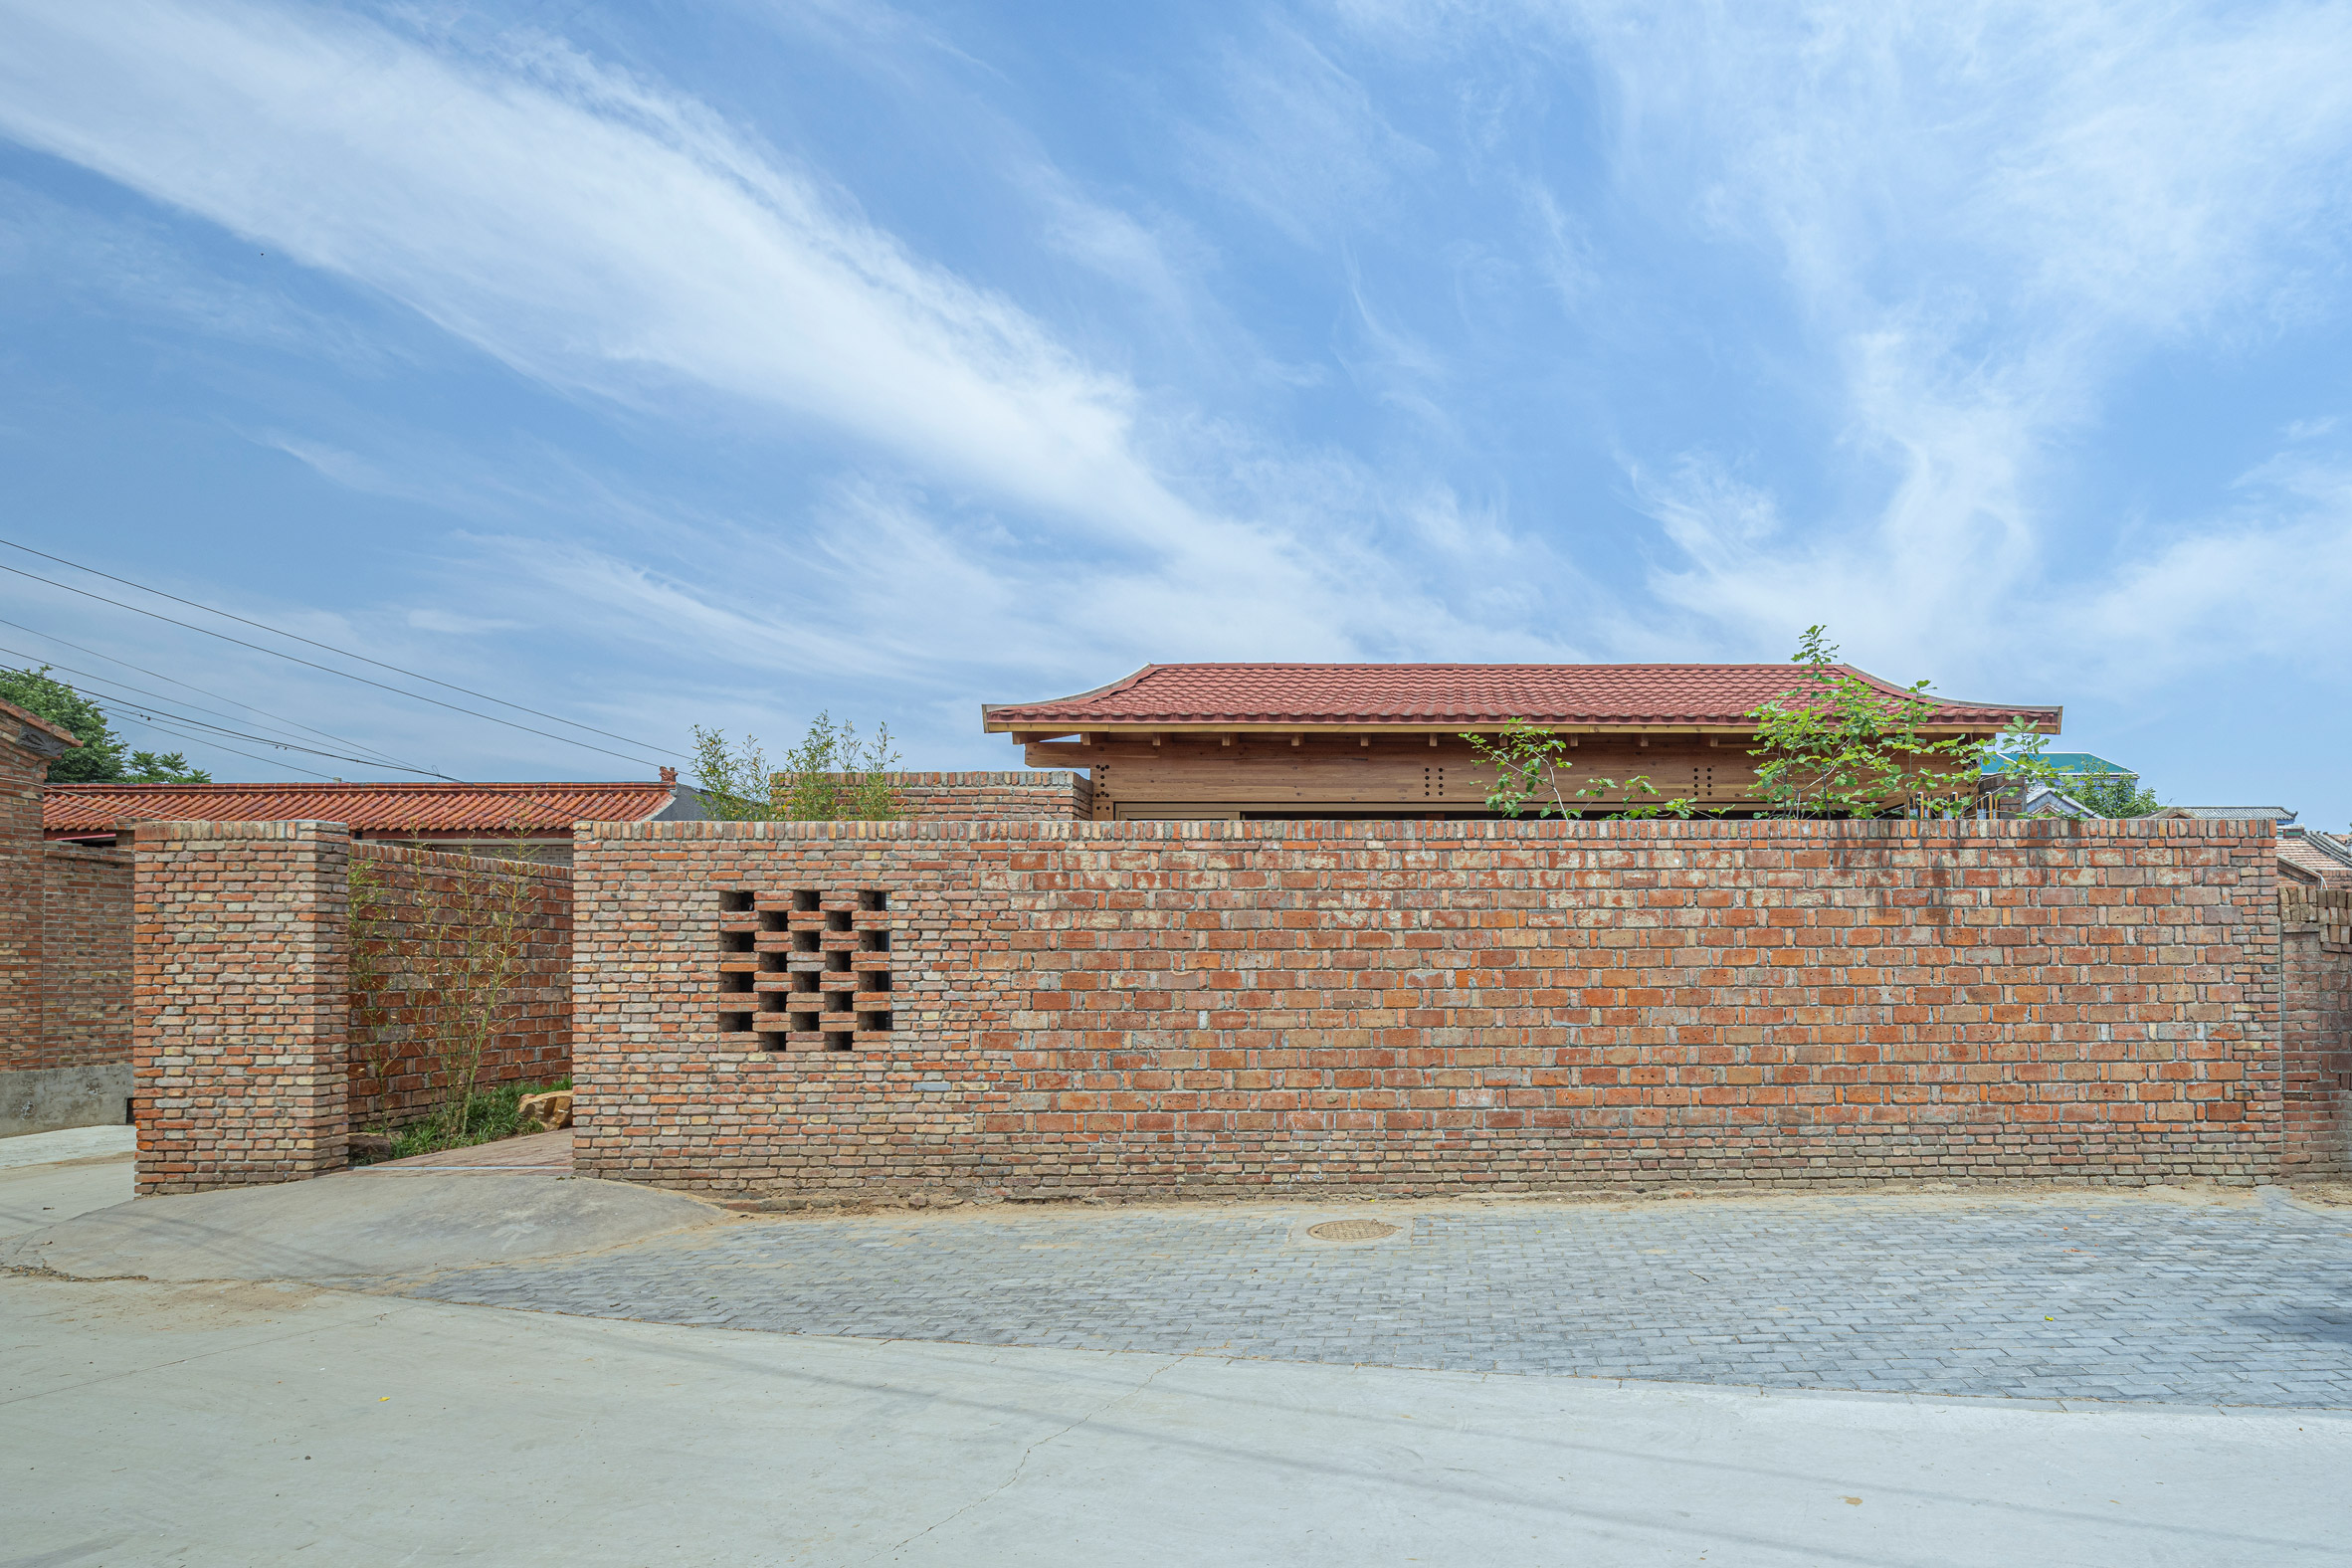 Brick courtyard home in China